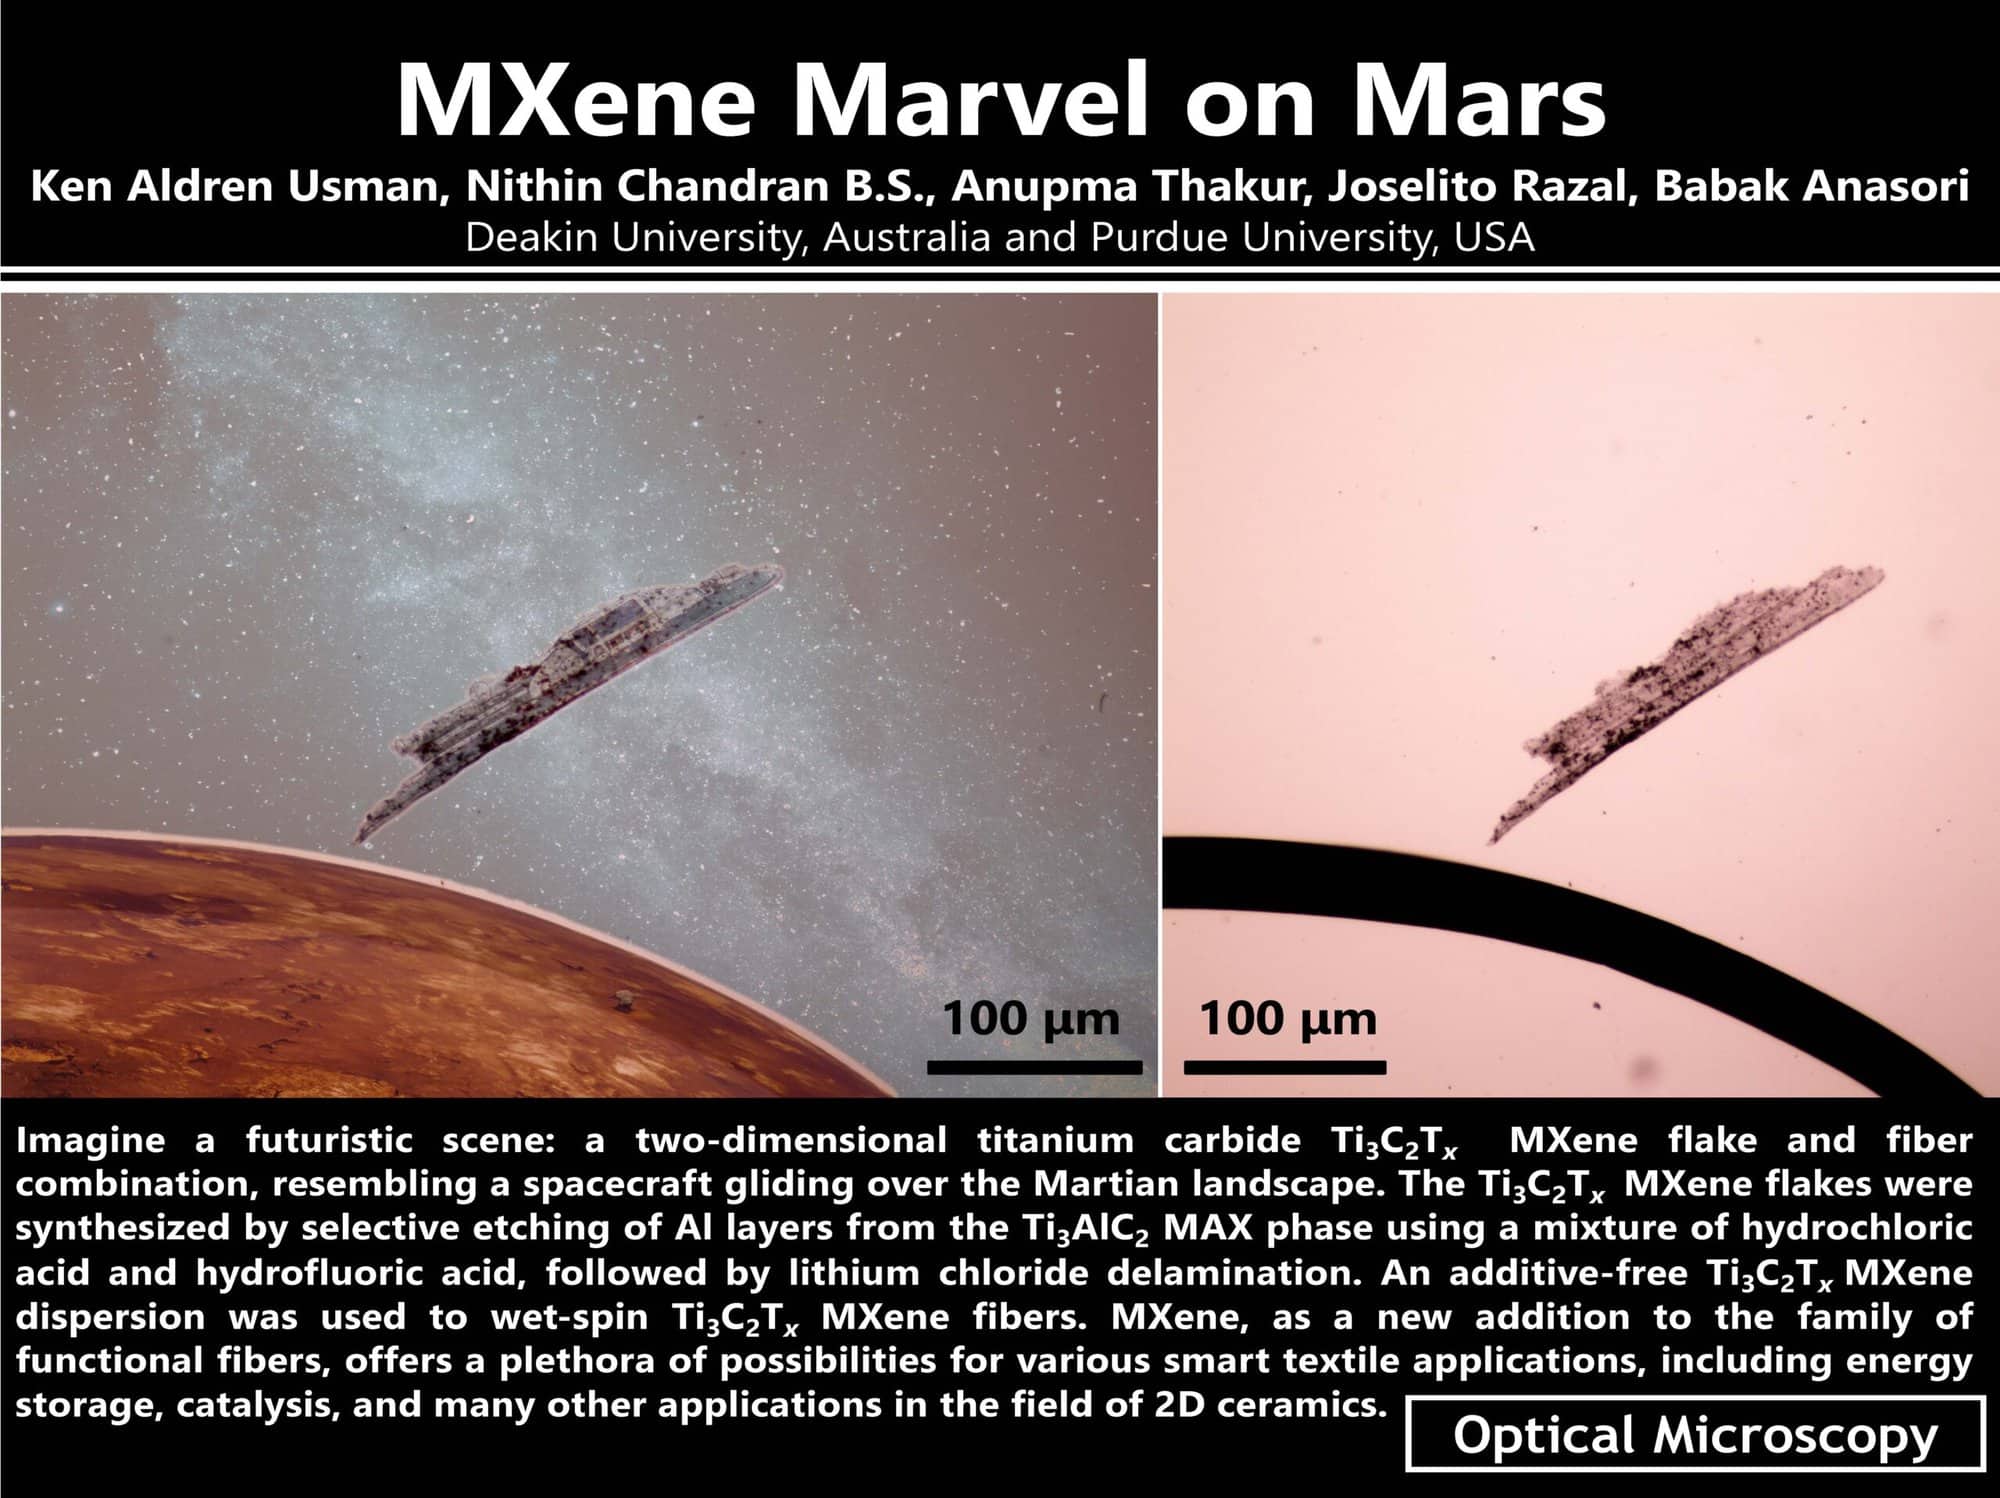 Nitin_Chandran-MXene Marvel on Mars